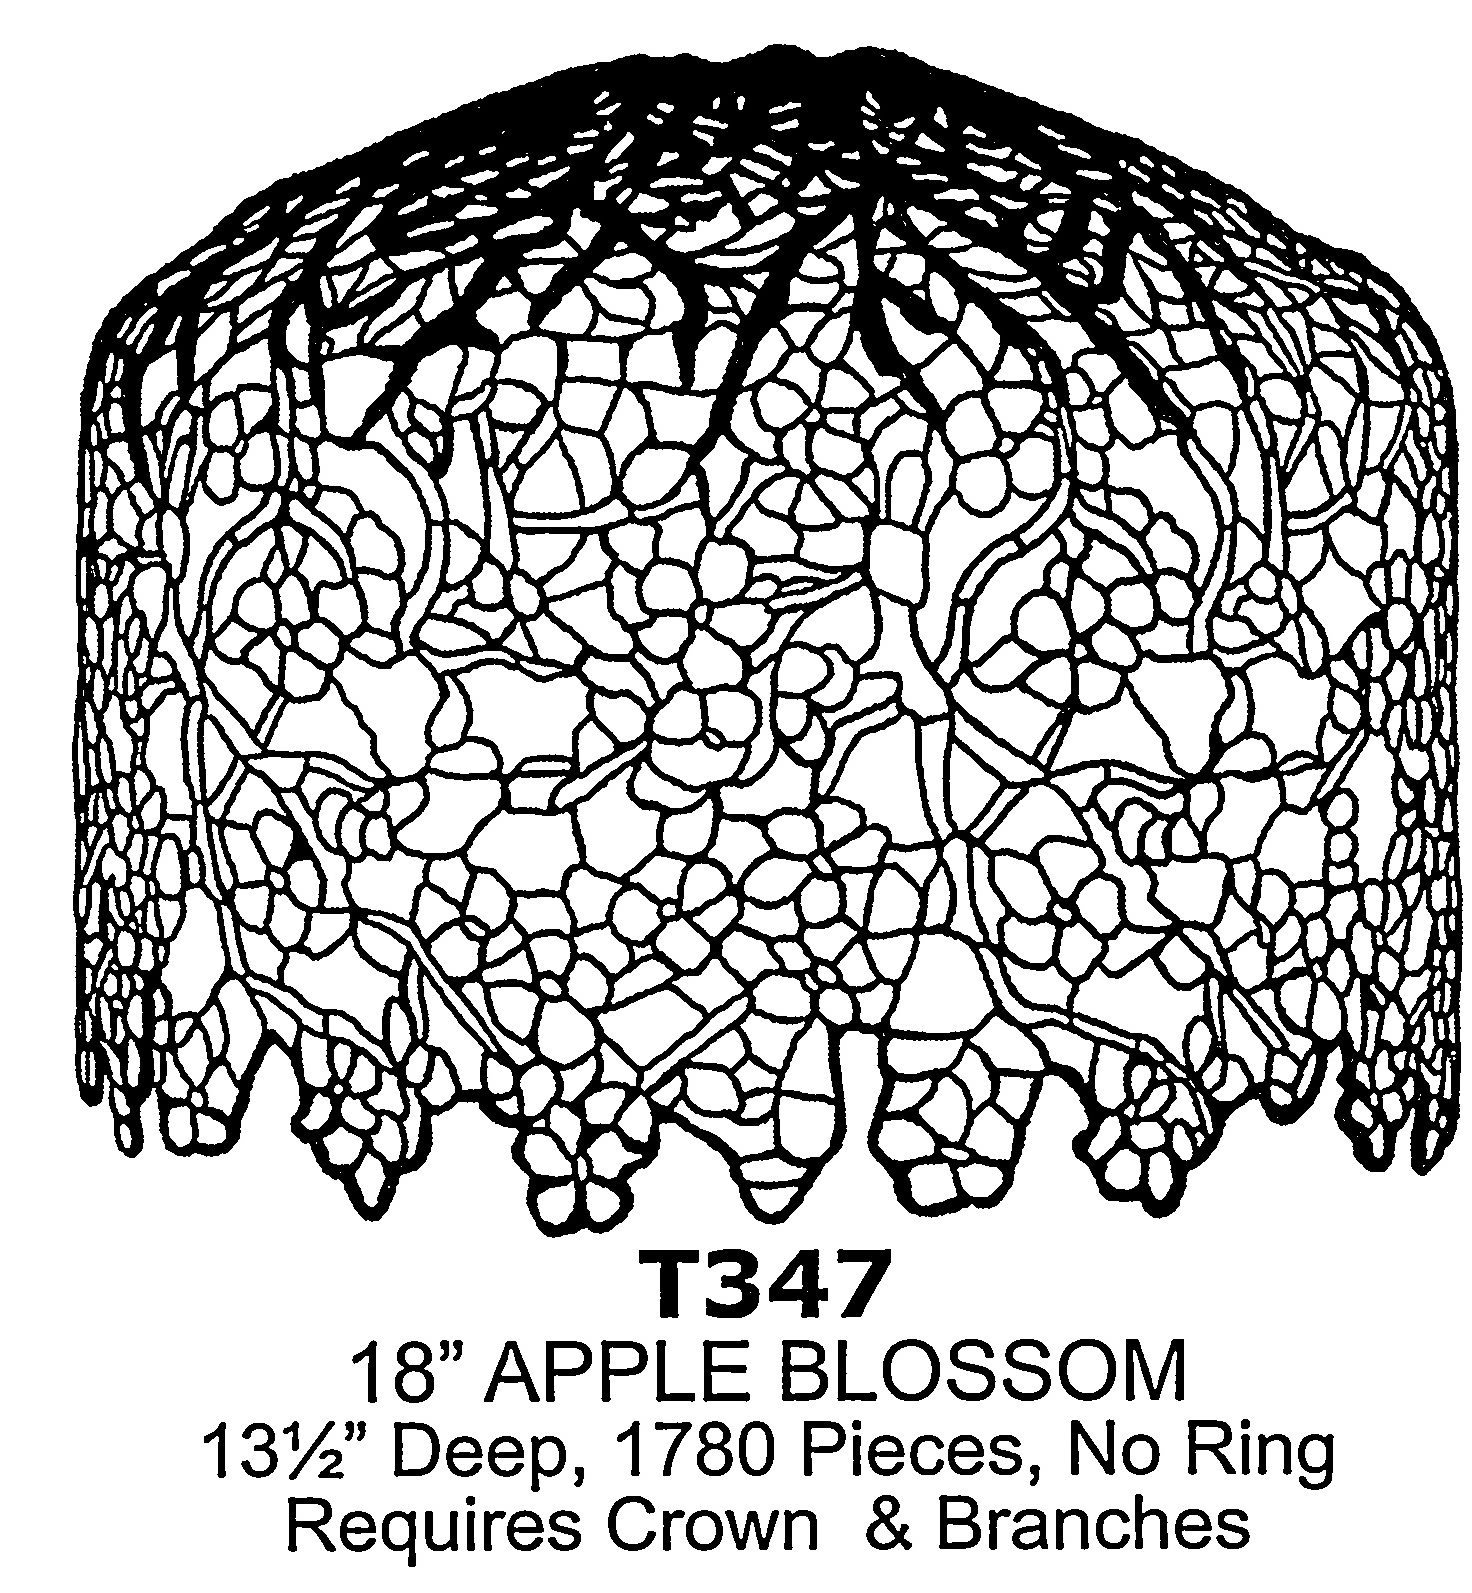 18" Apple Blossom